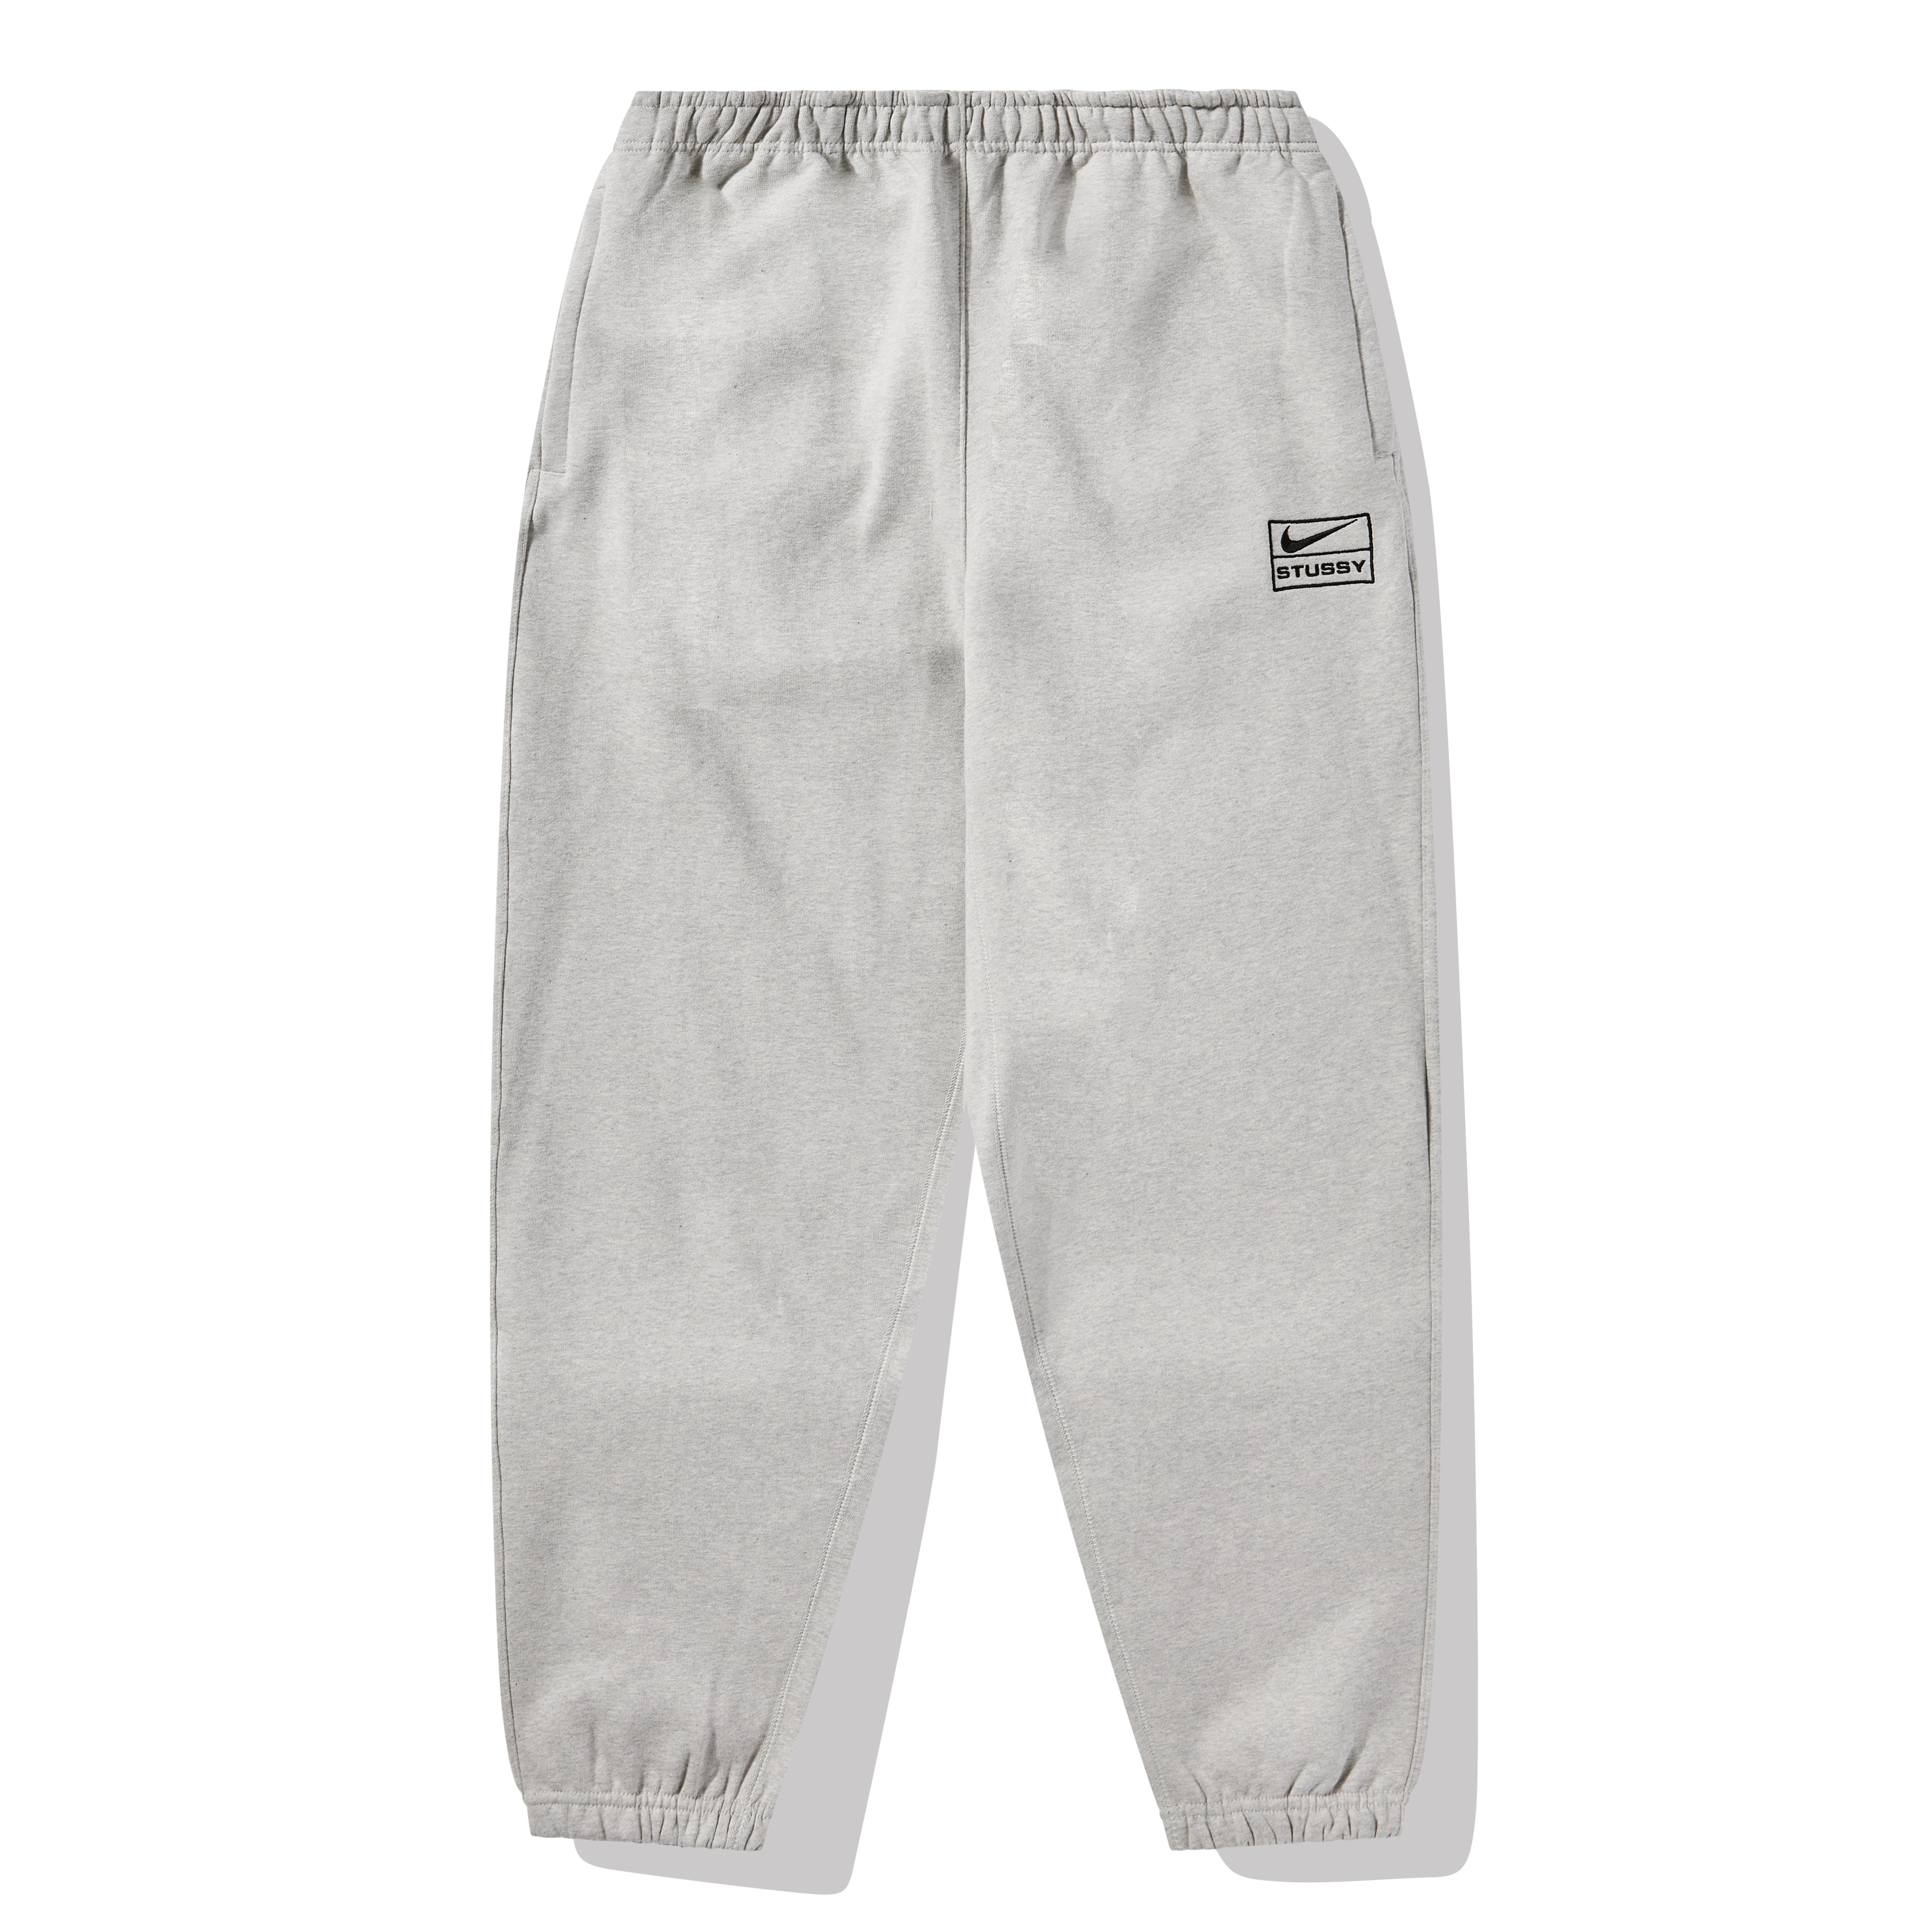 Nike - Stüssy Fleece Pant - (Grey Heather)